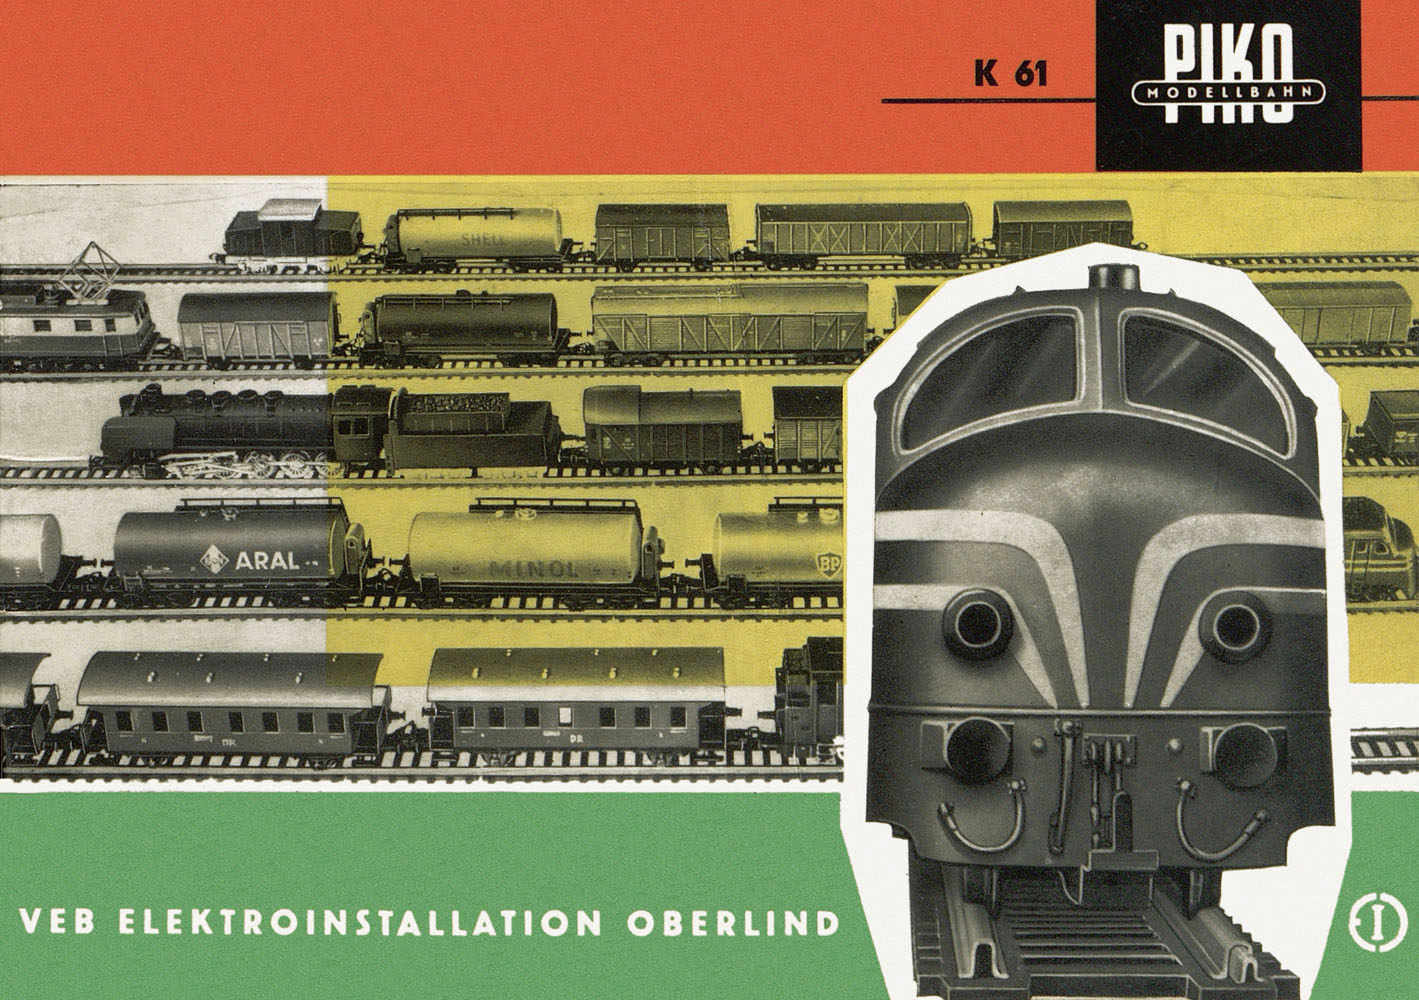 Piko-Modellbahn Katalog von 1970